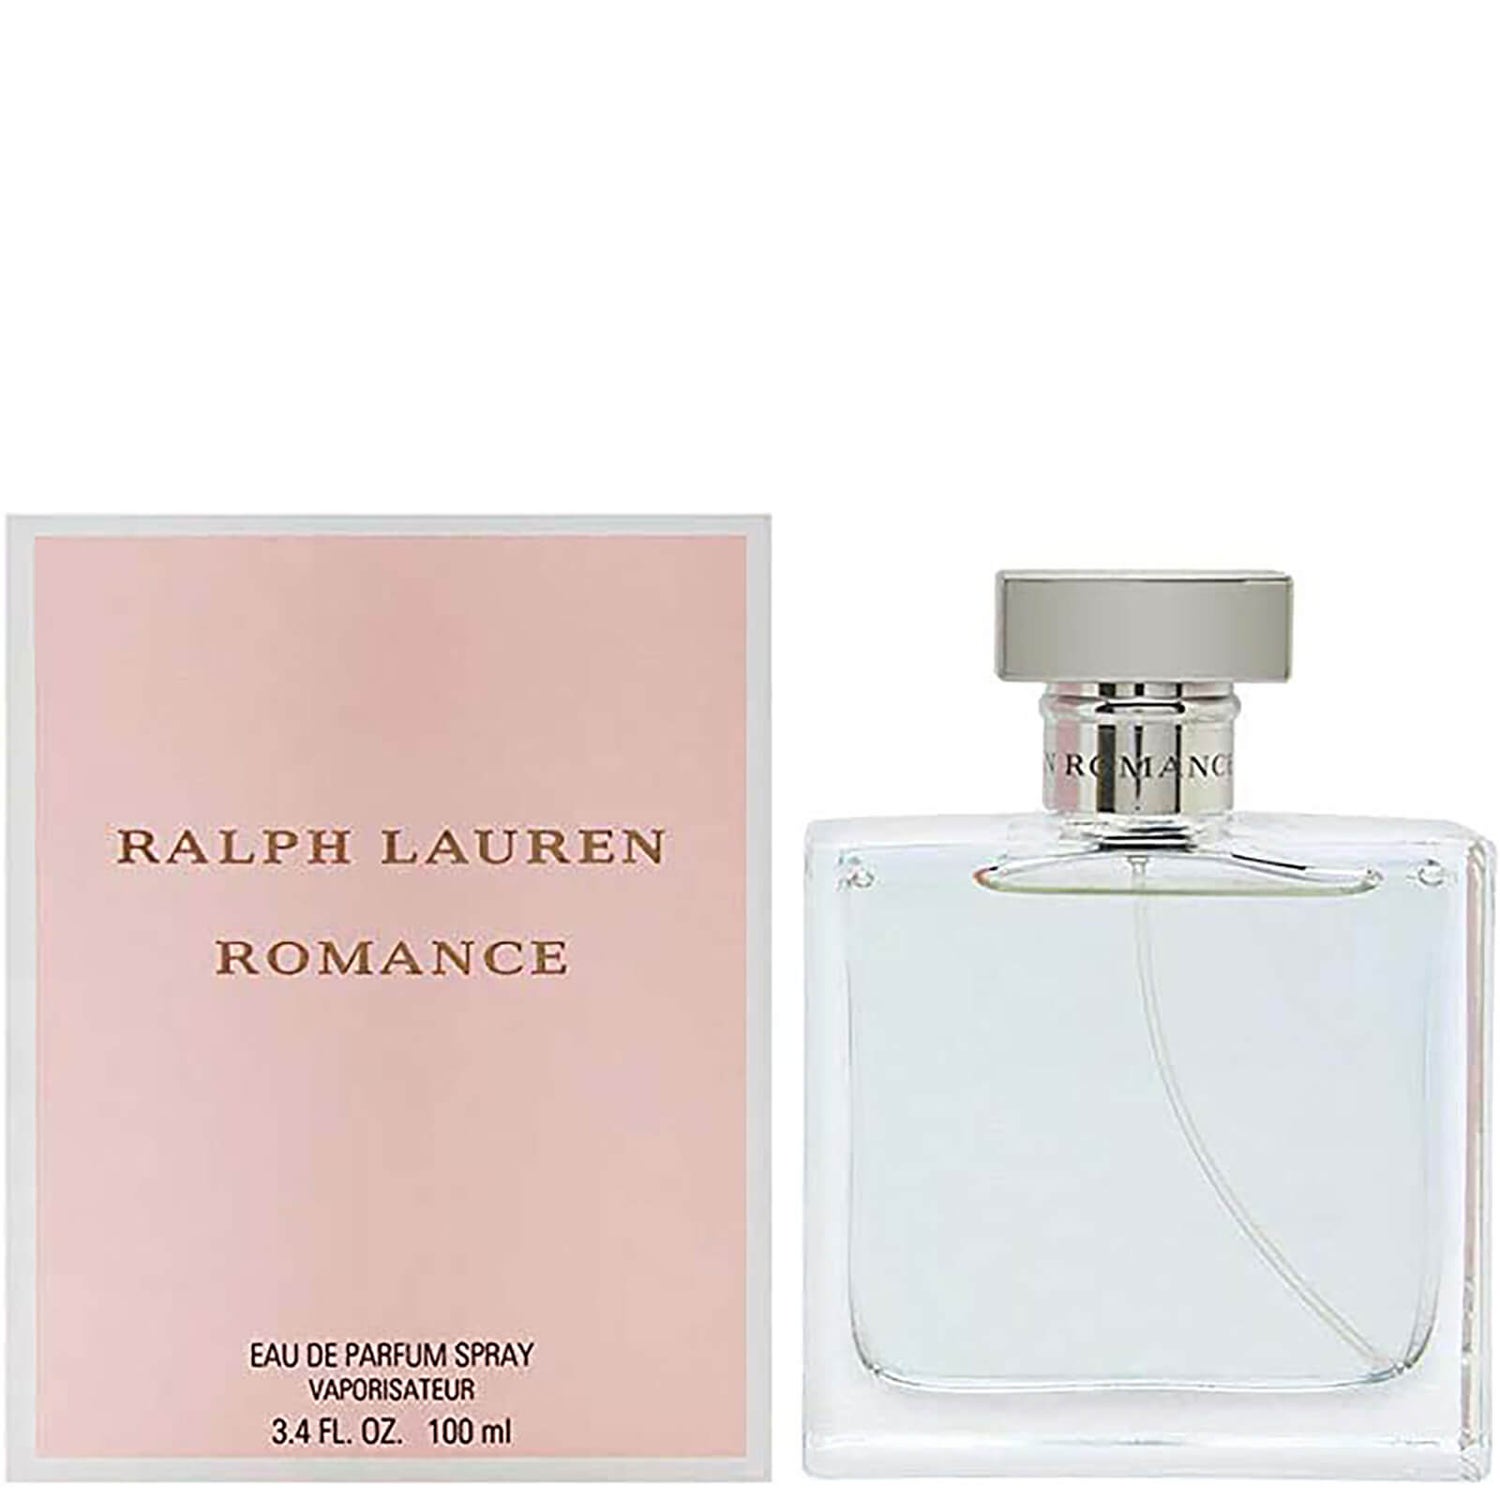 Ralph Lauren Romance Eau de Parfum 30ml